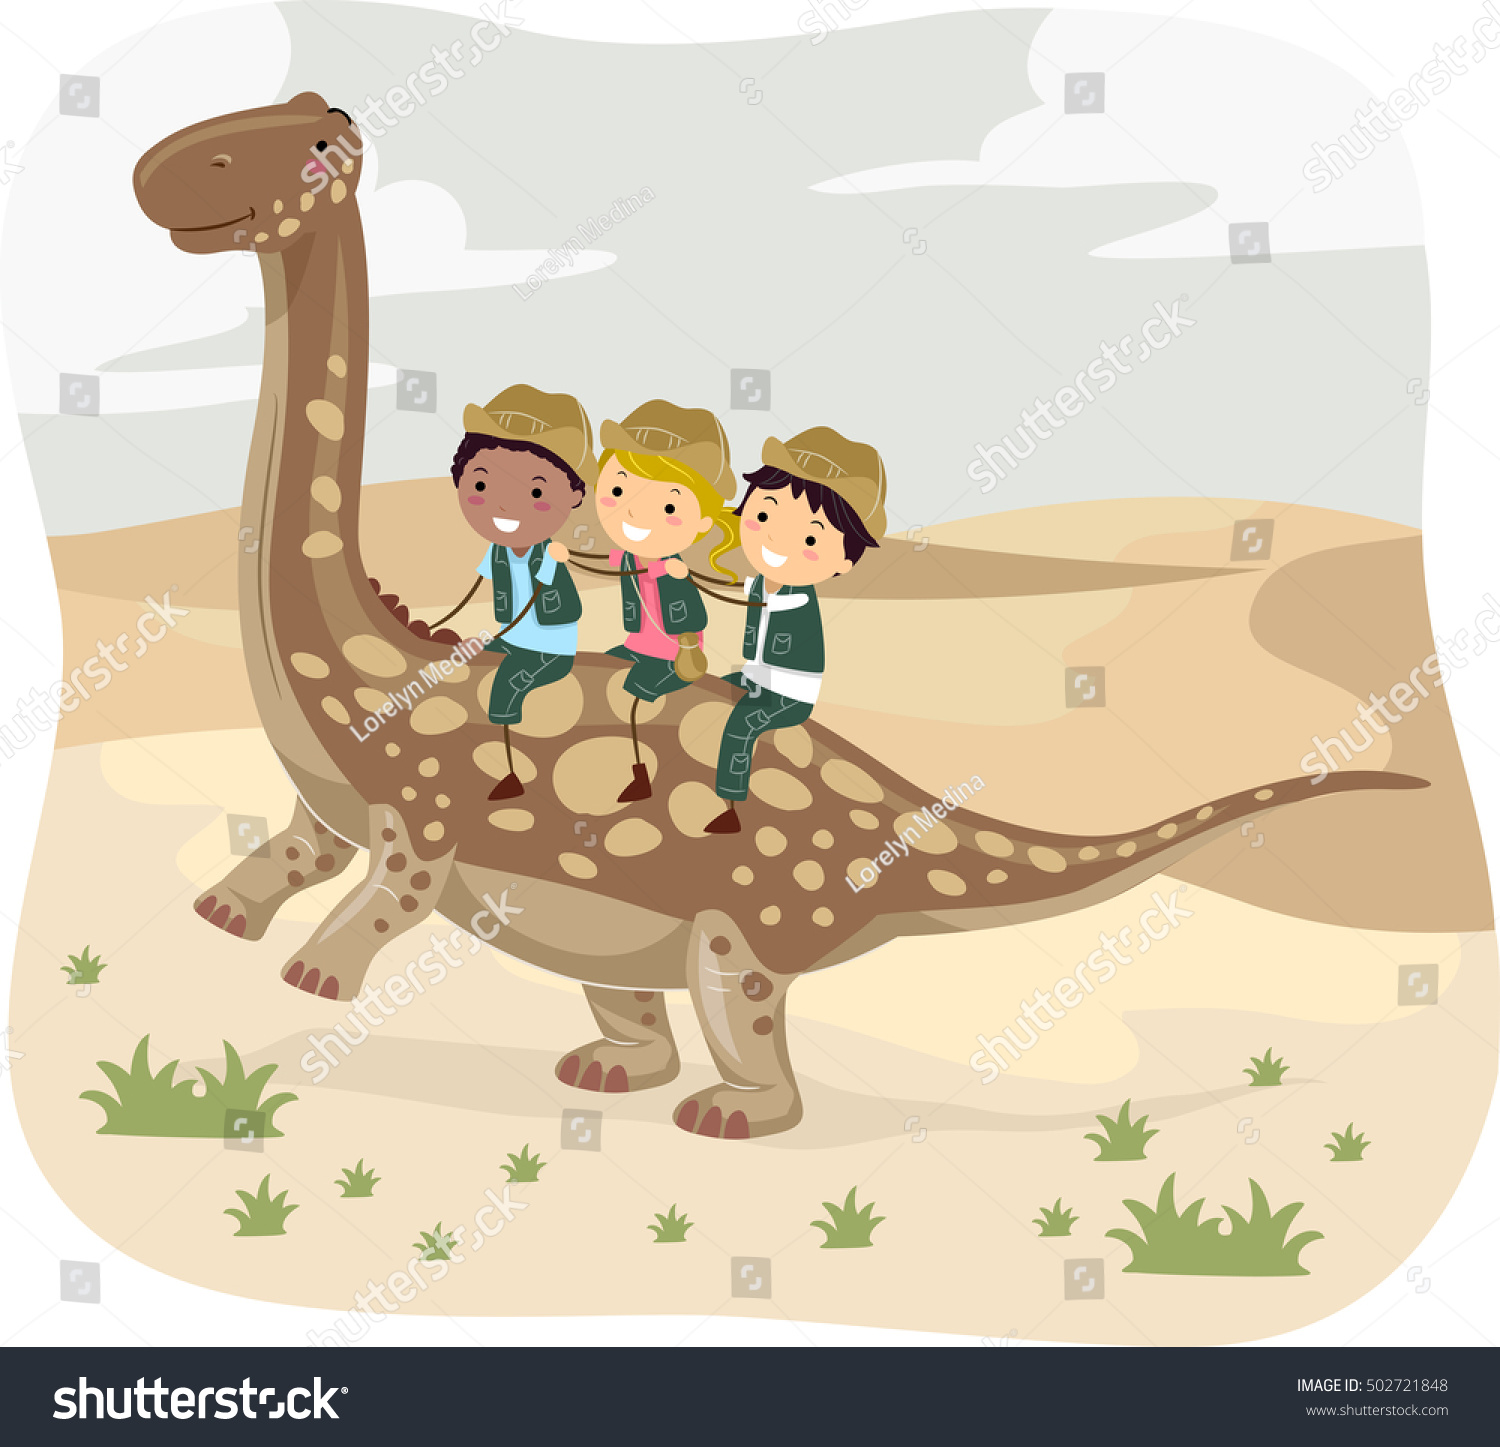 Stickman Illustration of Kids in Safari Uniform Riding an Argentinosaurus Through the Desert #502721848